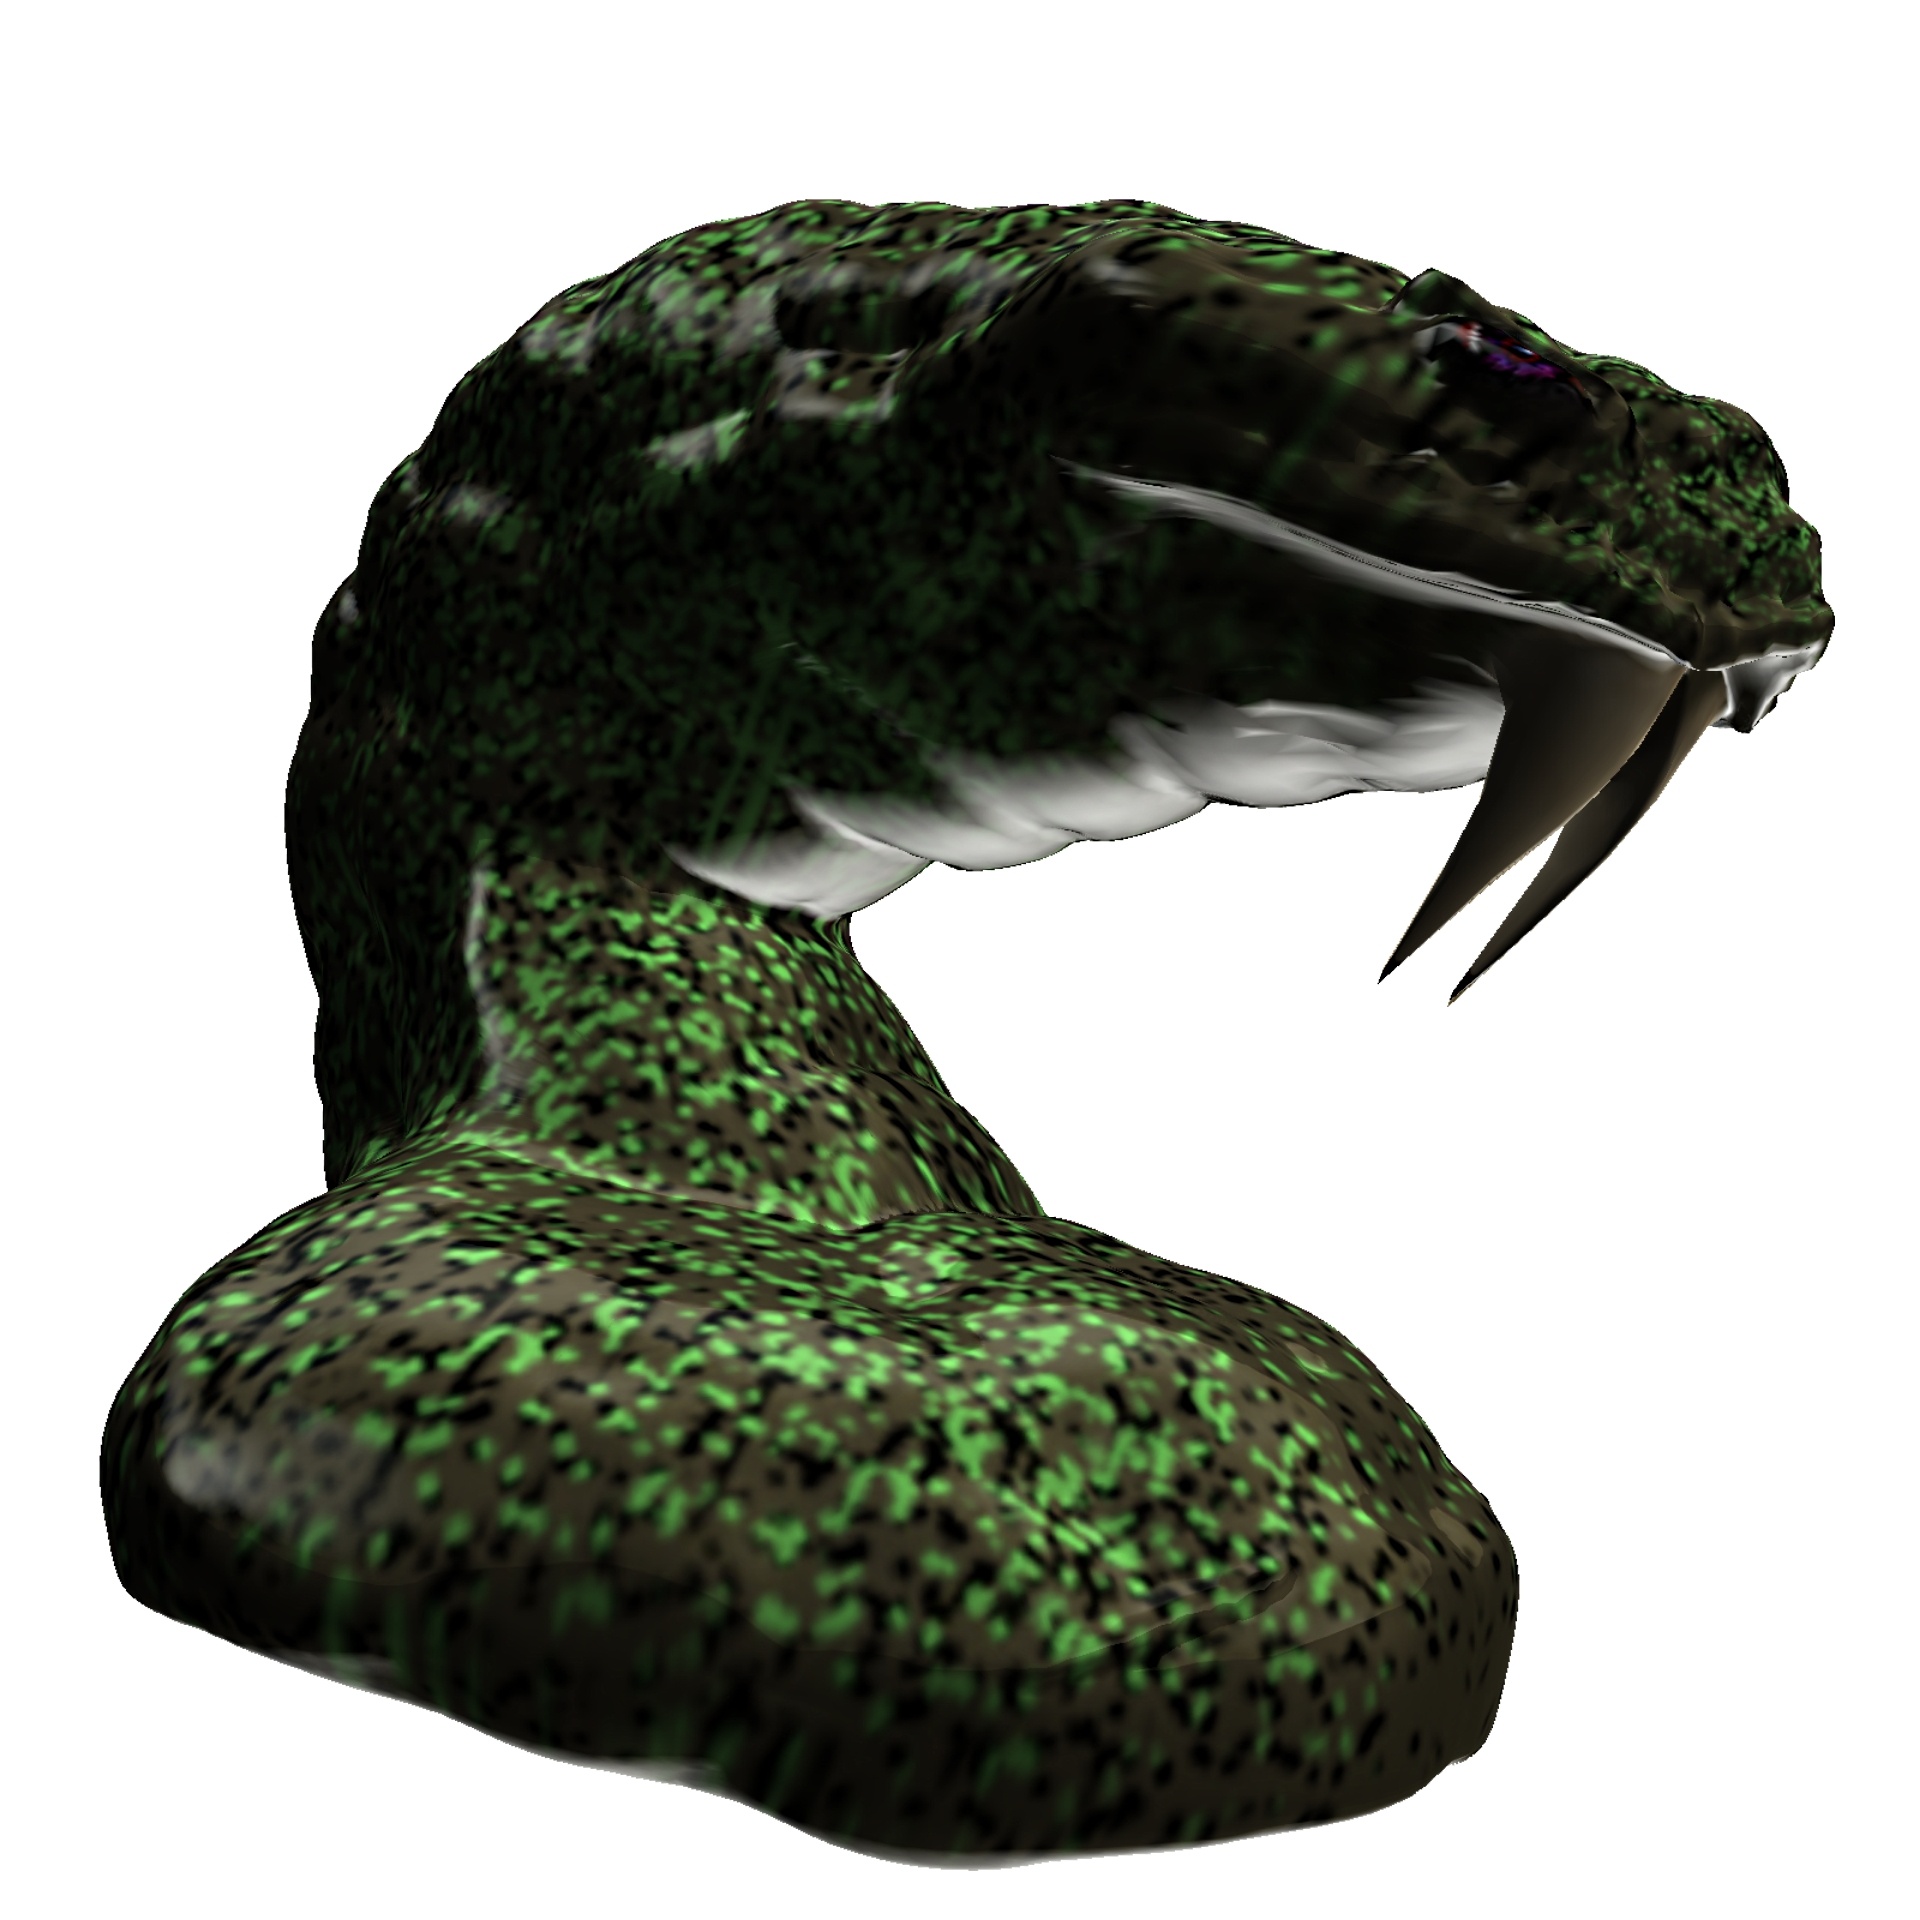 green snake head free photo